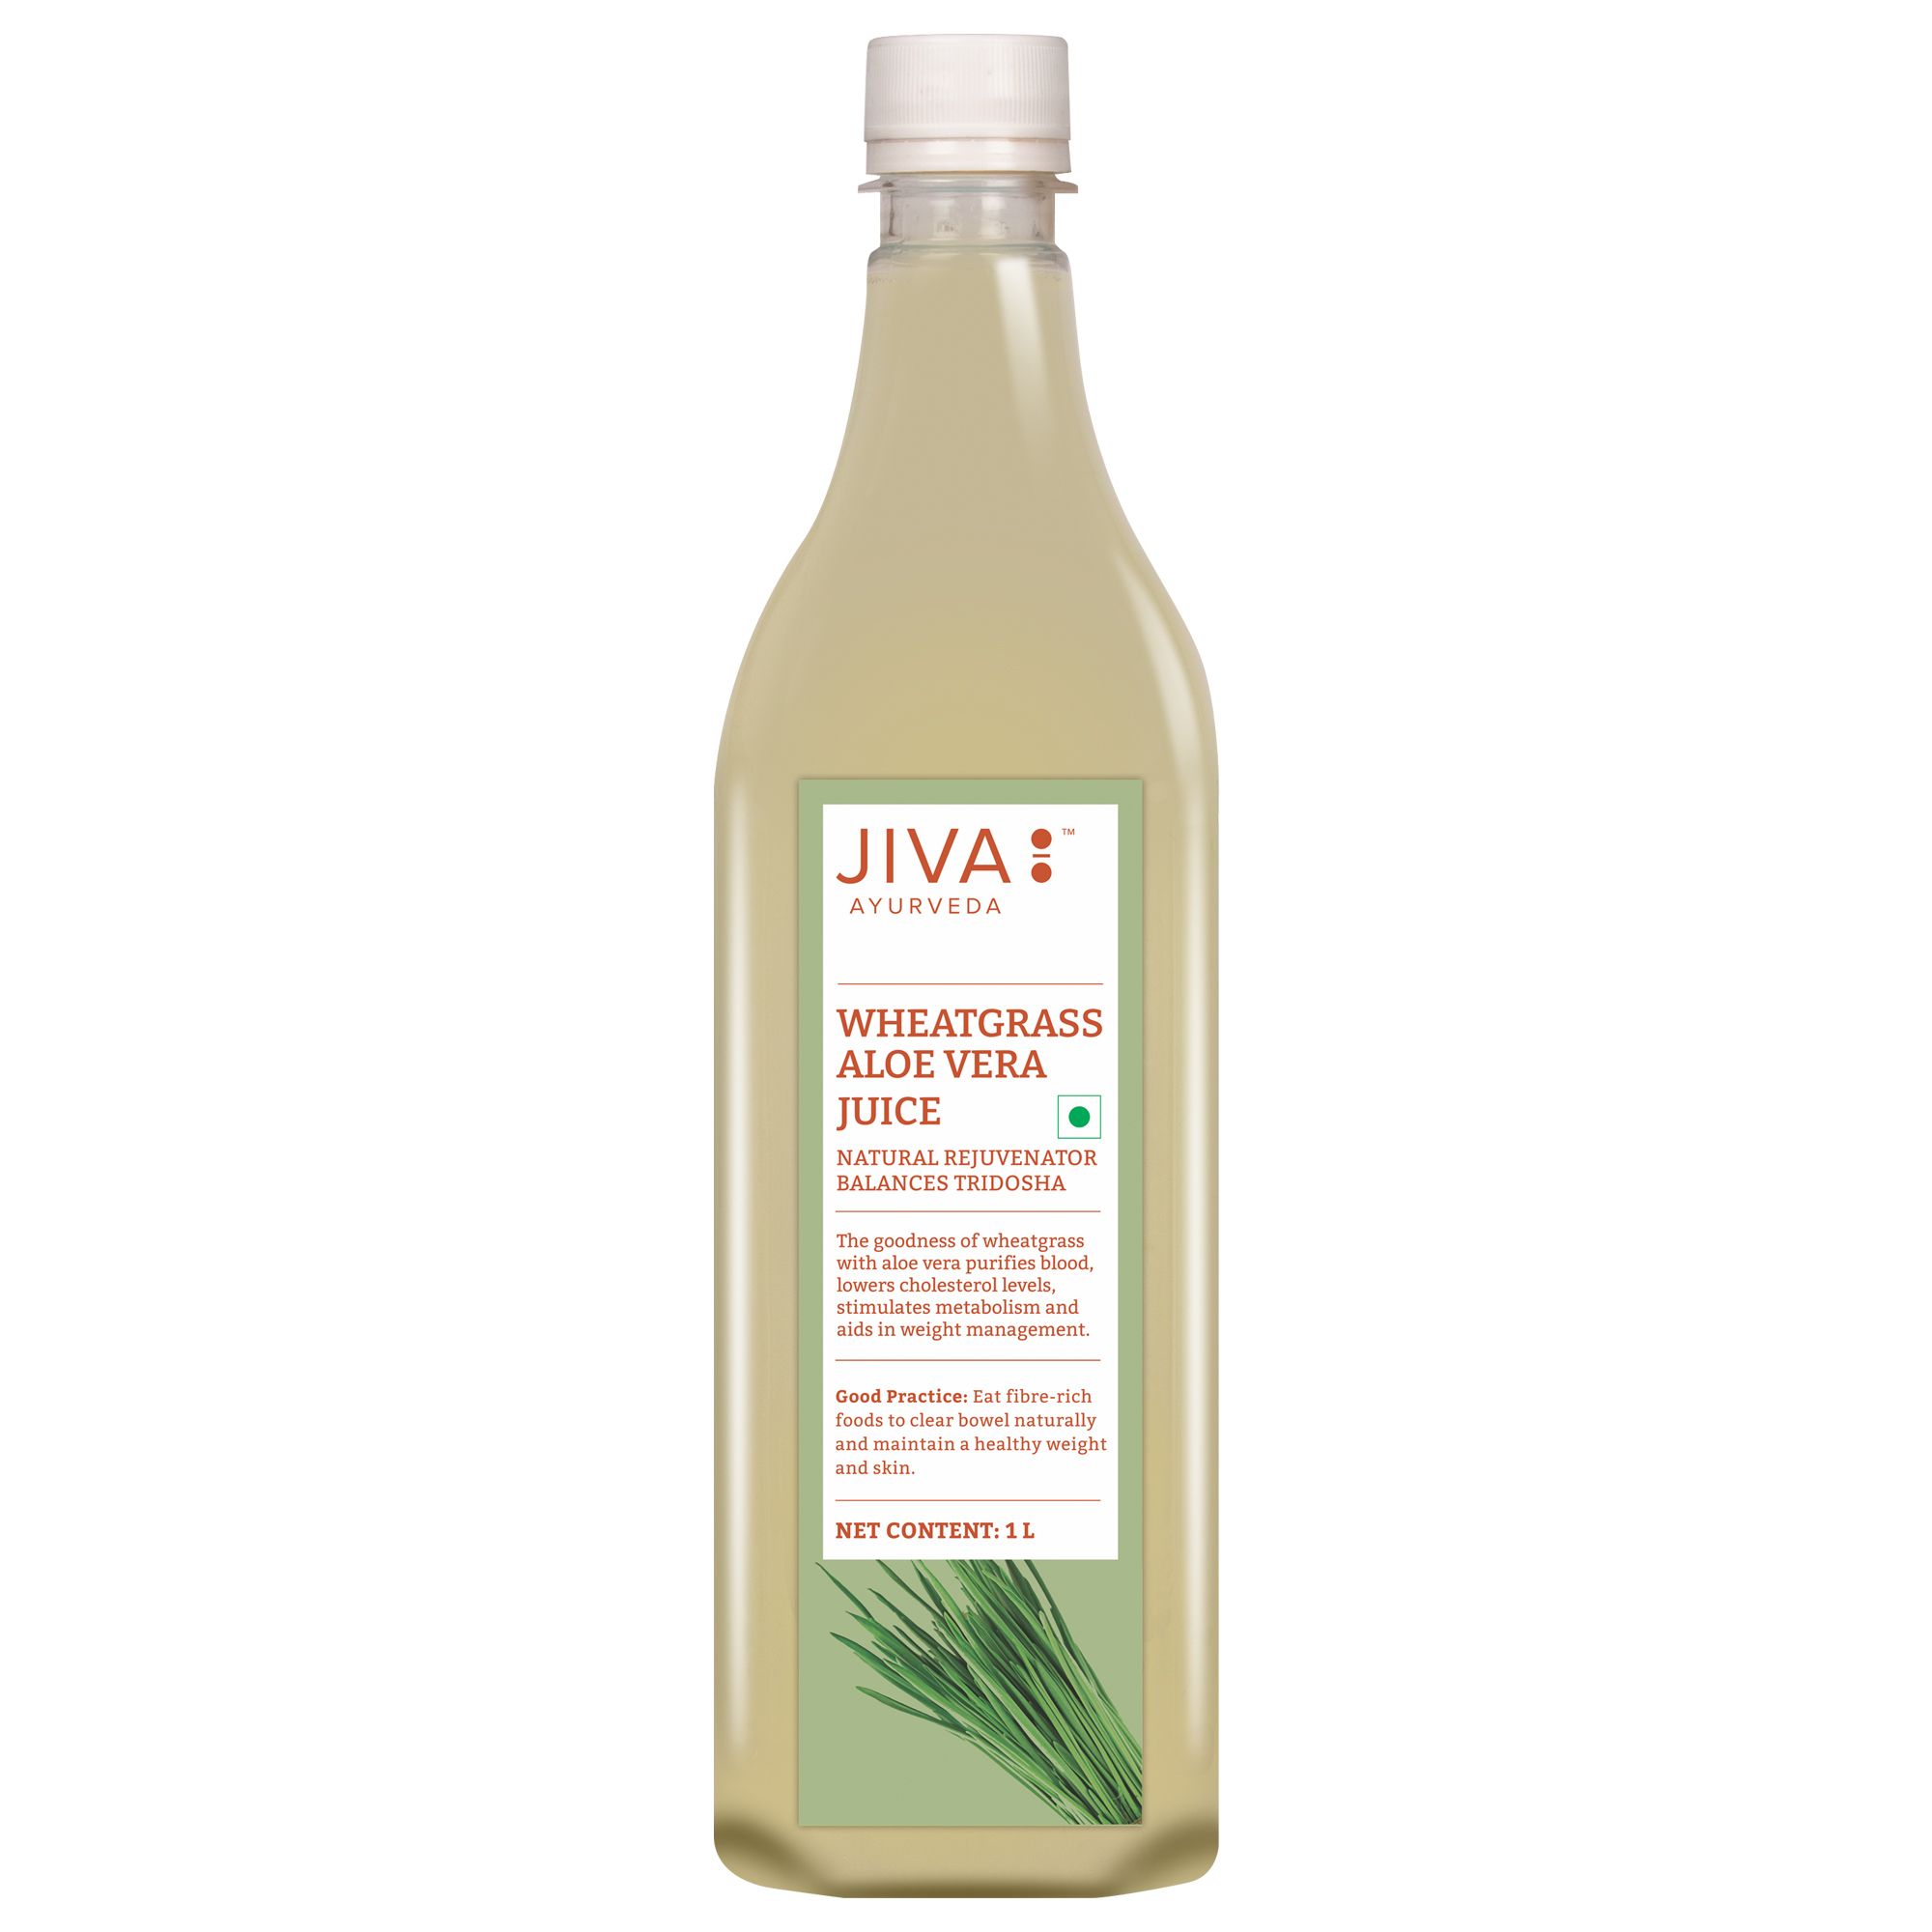 Buy Jiva Ayurveda Wheatgrass Aloevera Juice at Best Price Online